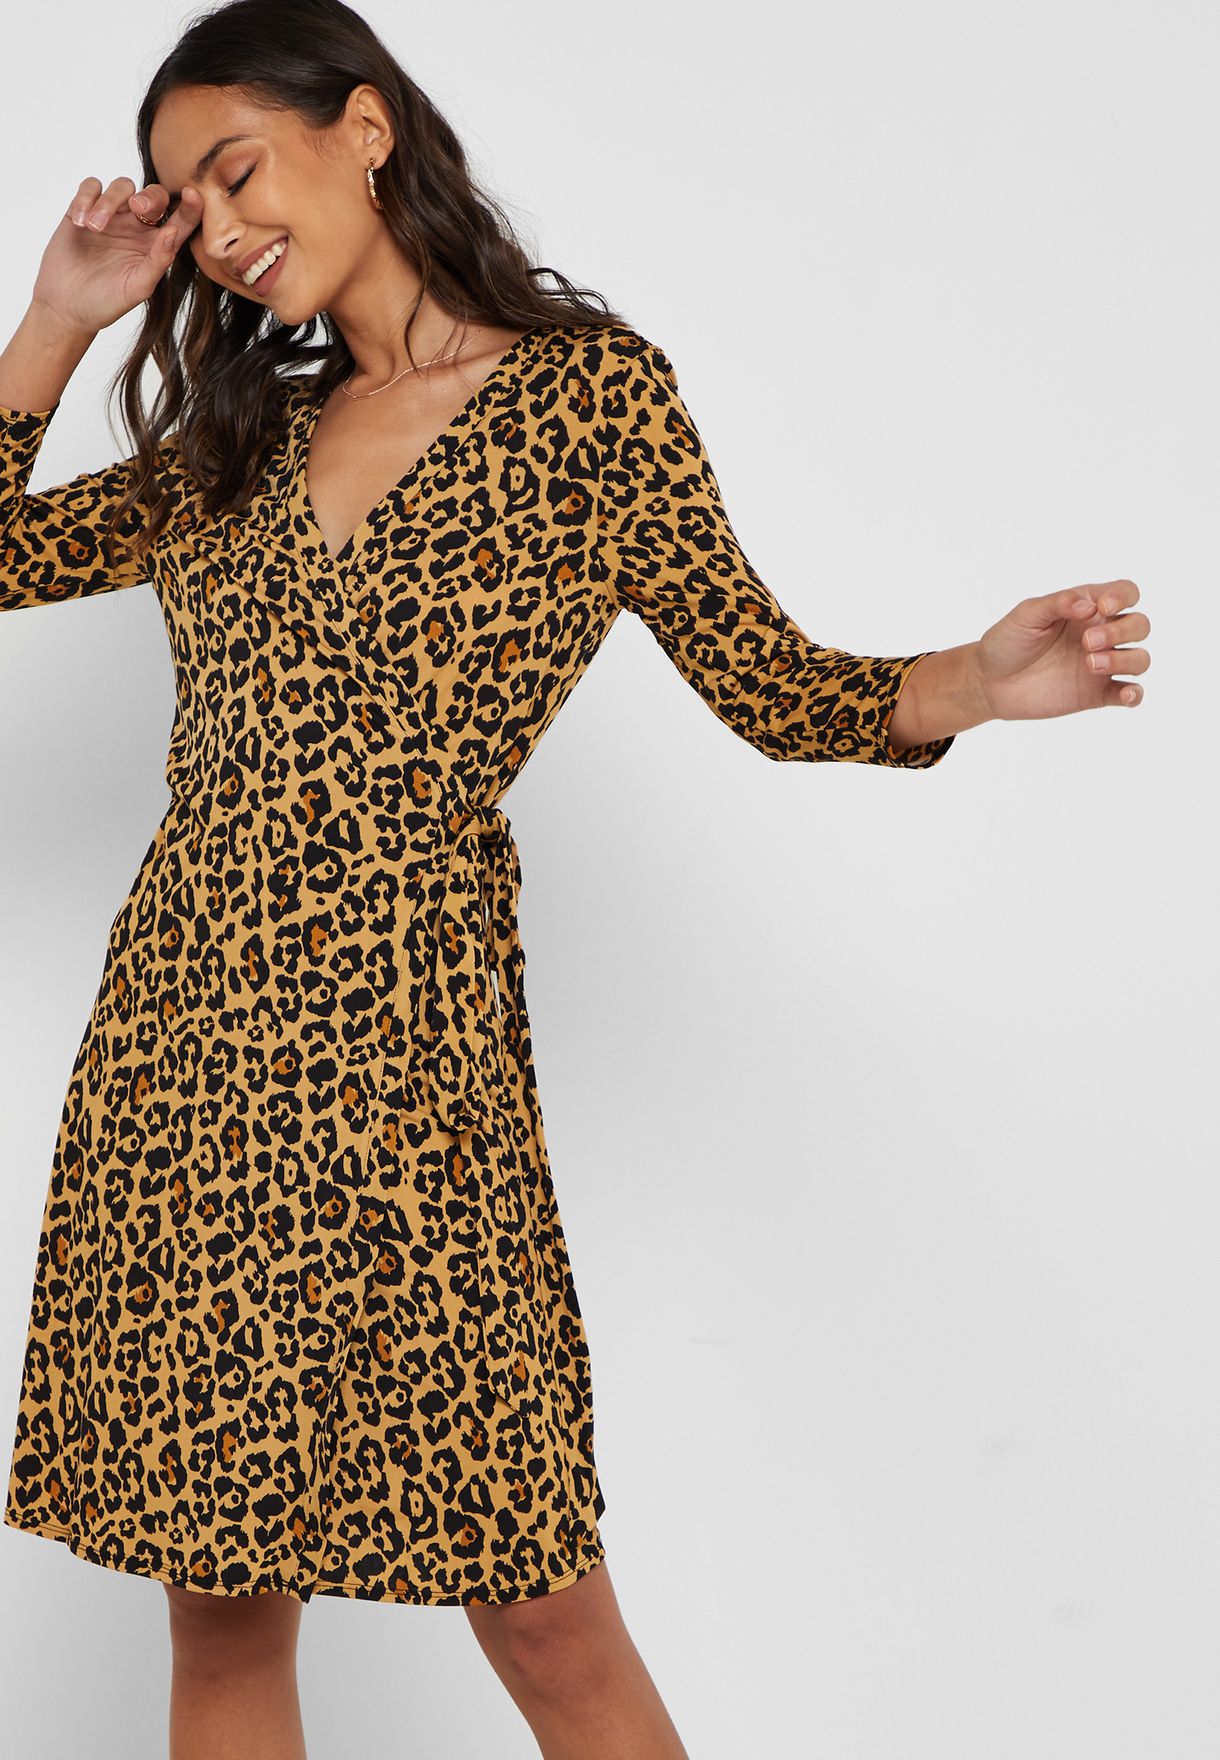 leopard dress mango